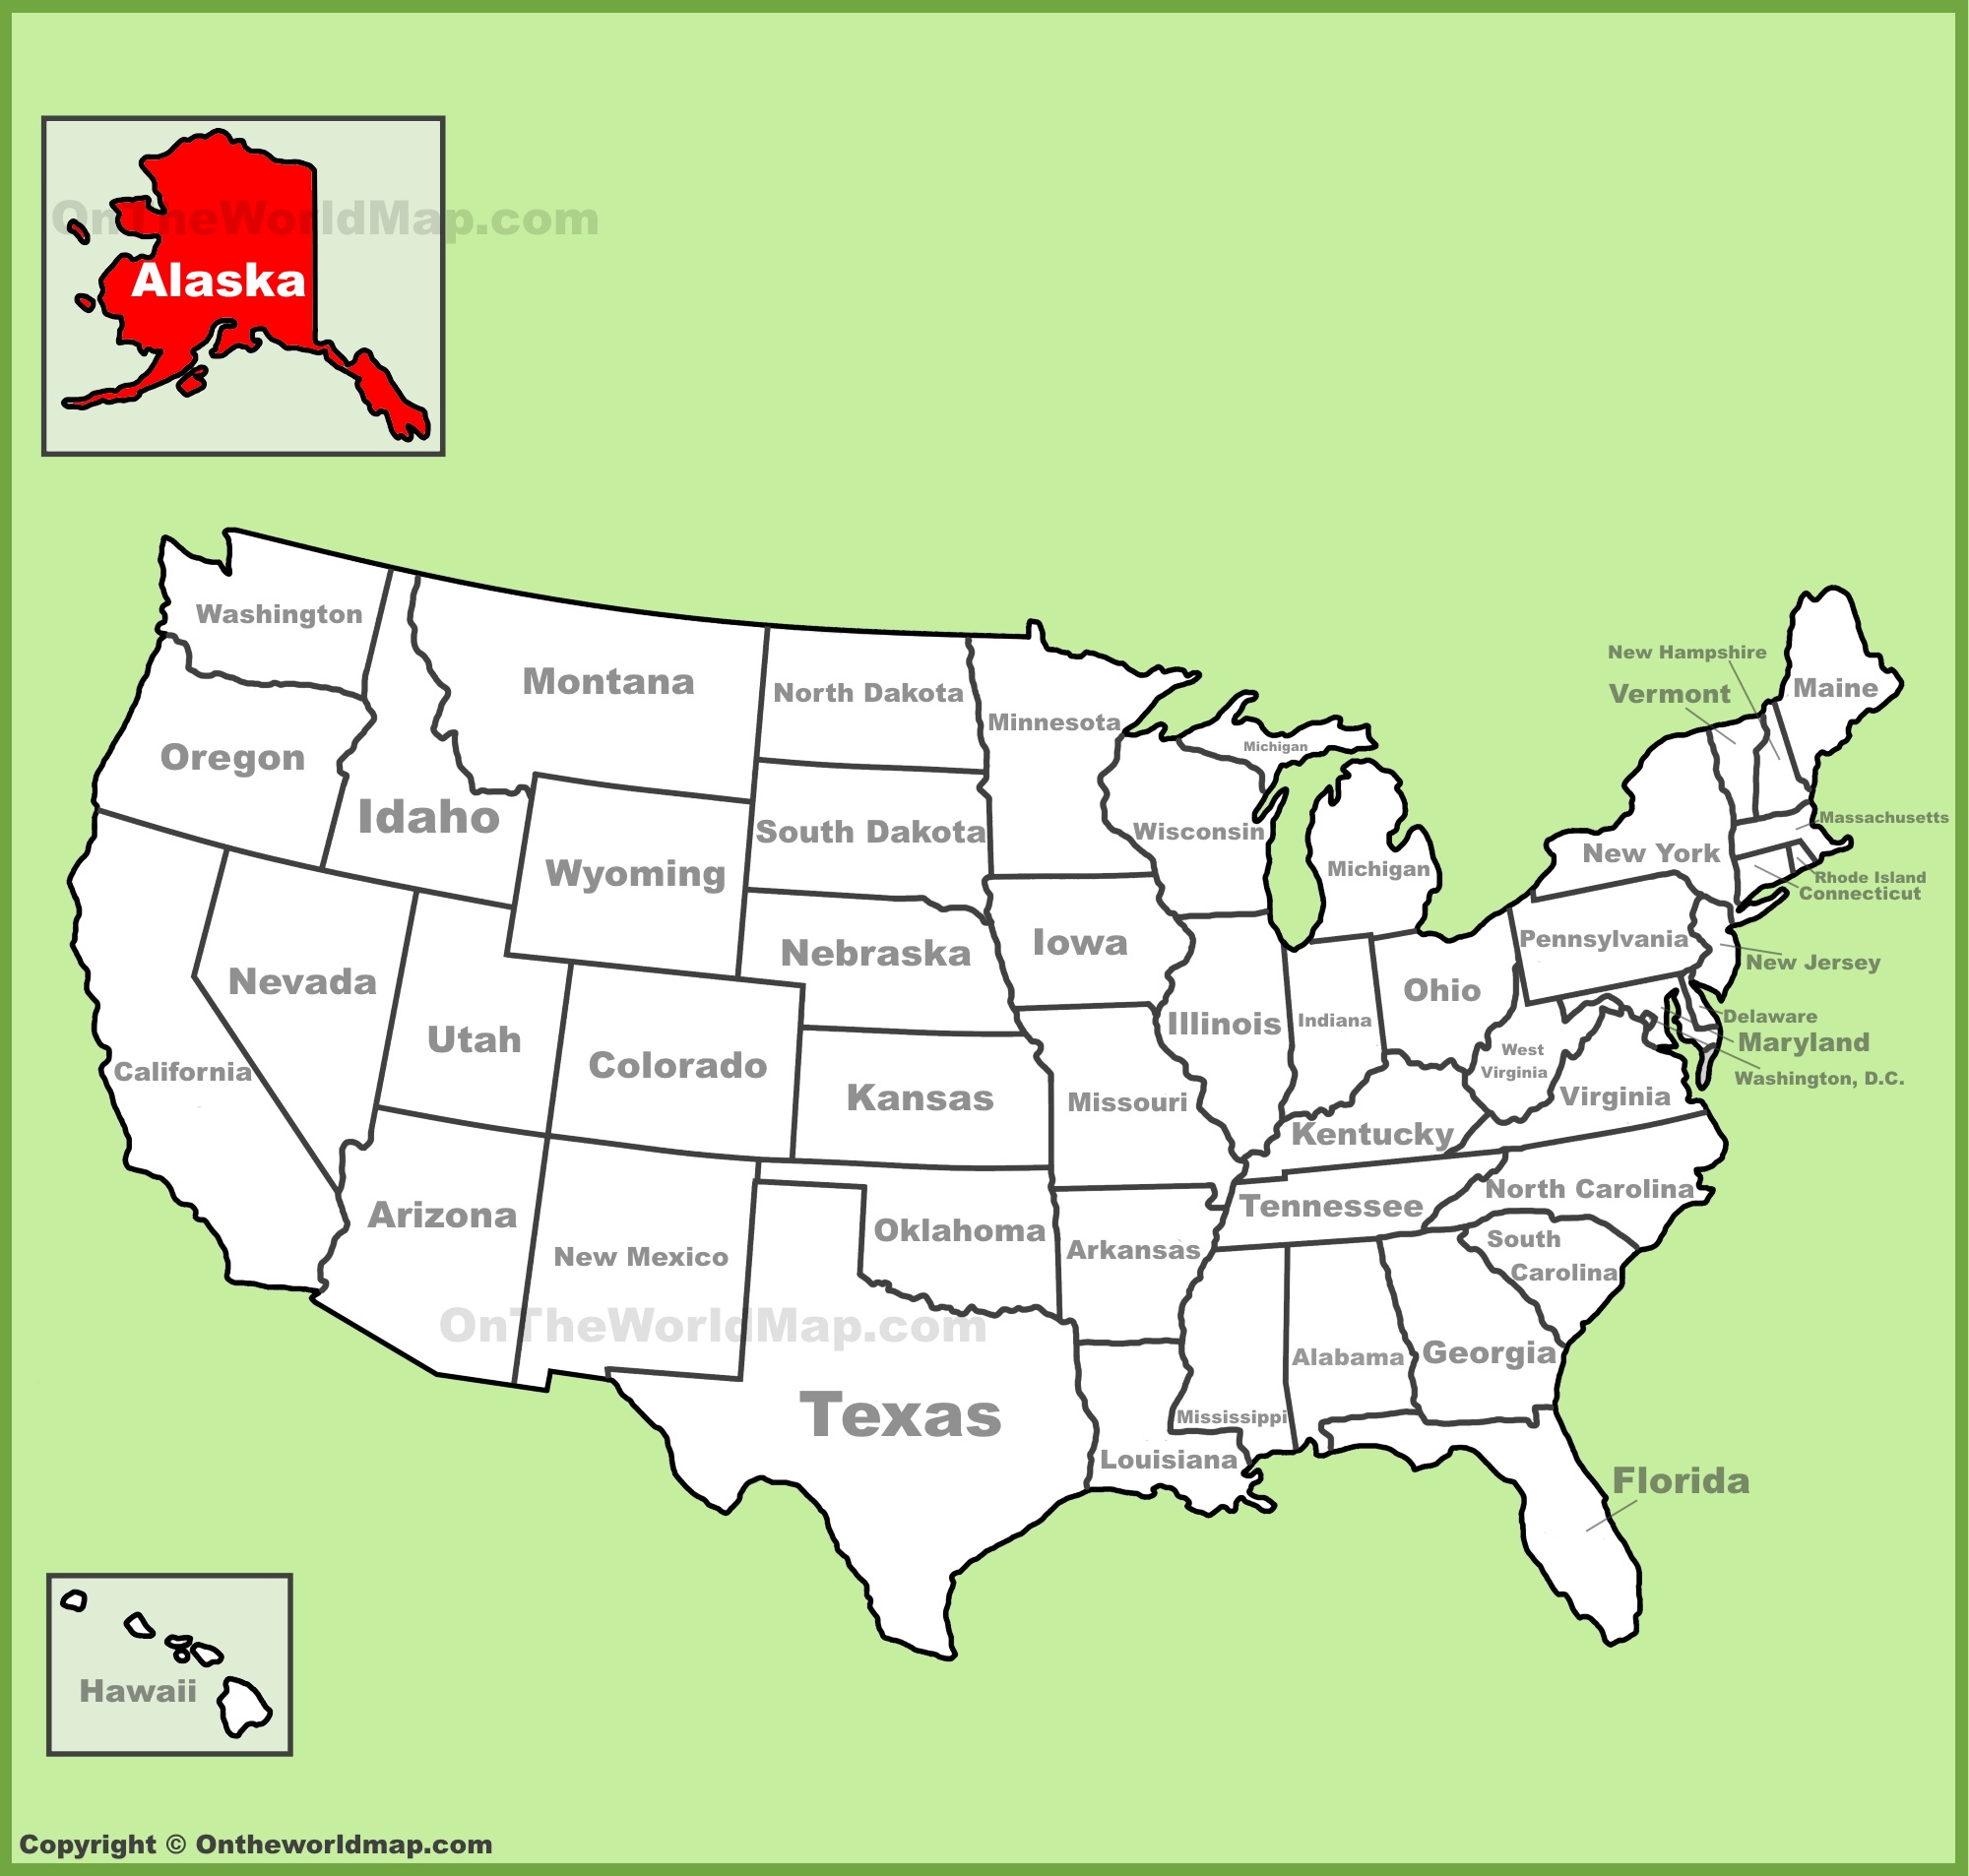 Alaska Location On The Us Map